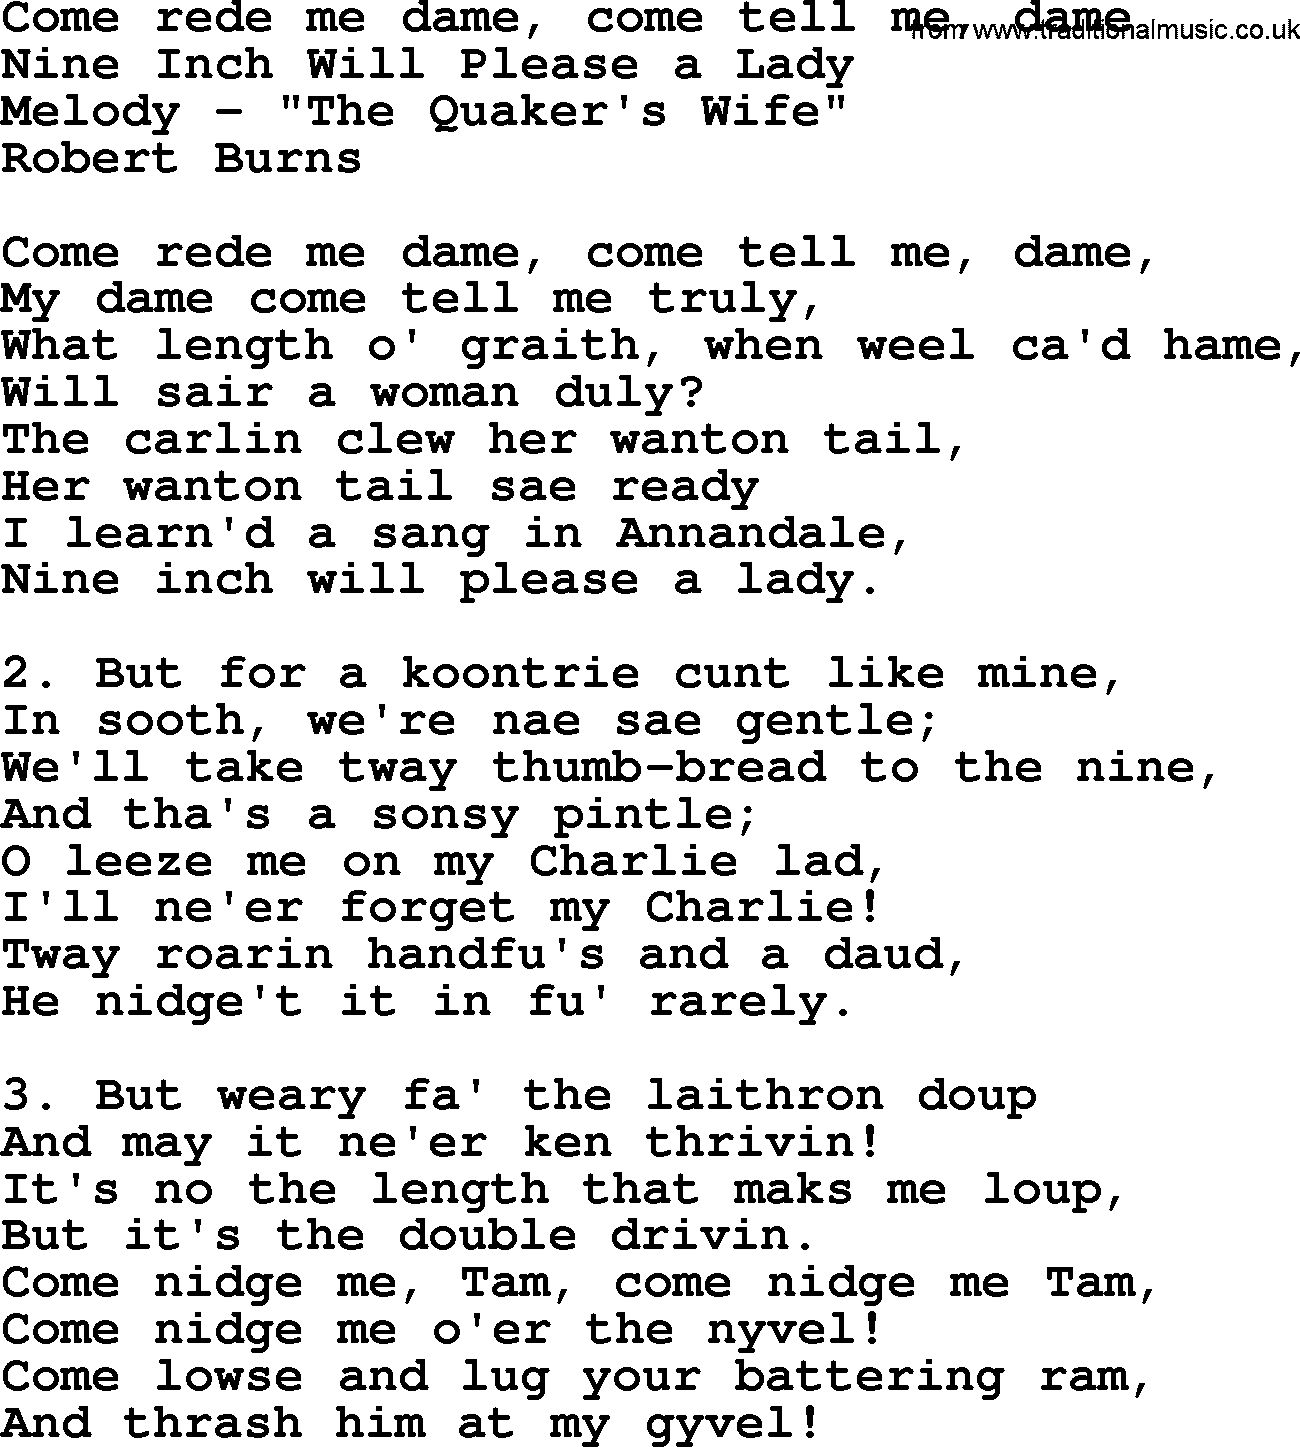 Robert Burns Songs & Lyrics: Come Rede Me Dame, Come Tell Me, Dame